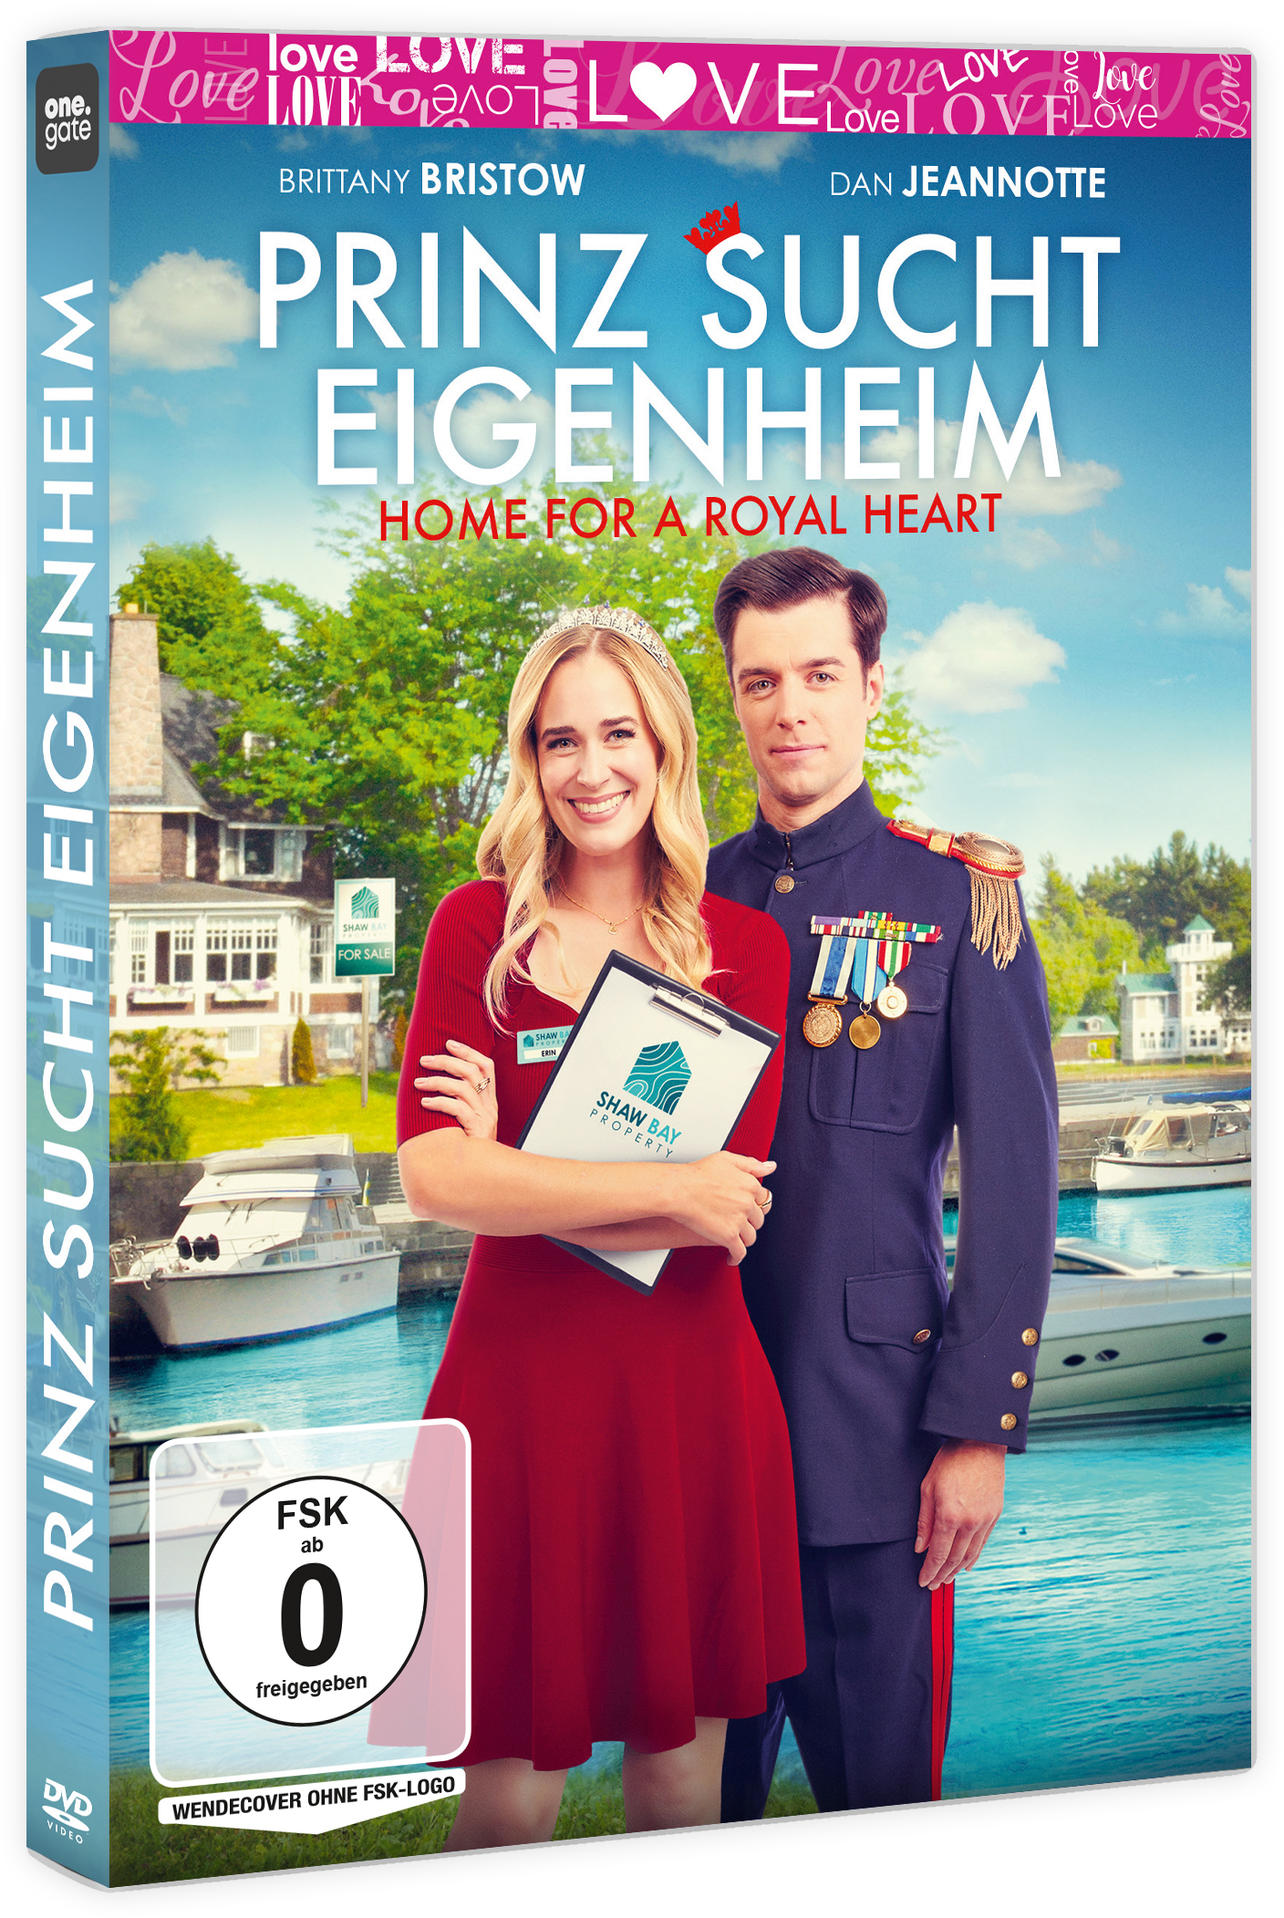 Home - Royal Eigenheim a sucht Prinz for Heart DVD